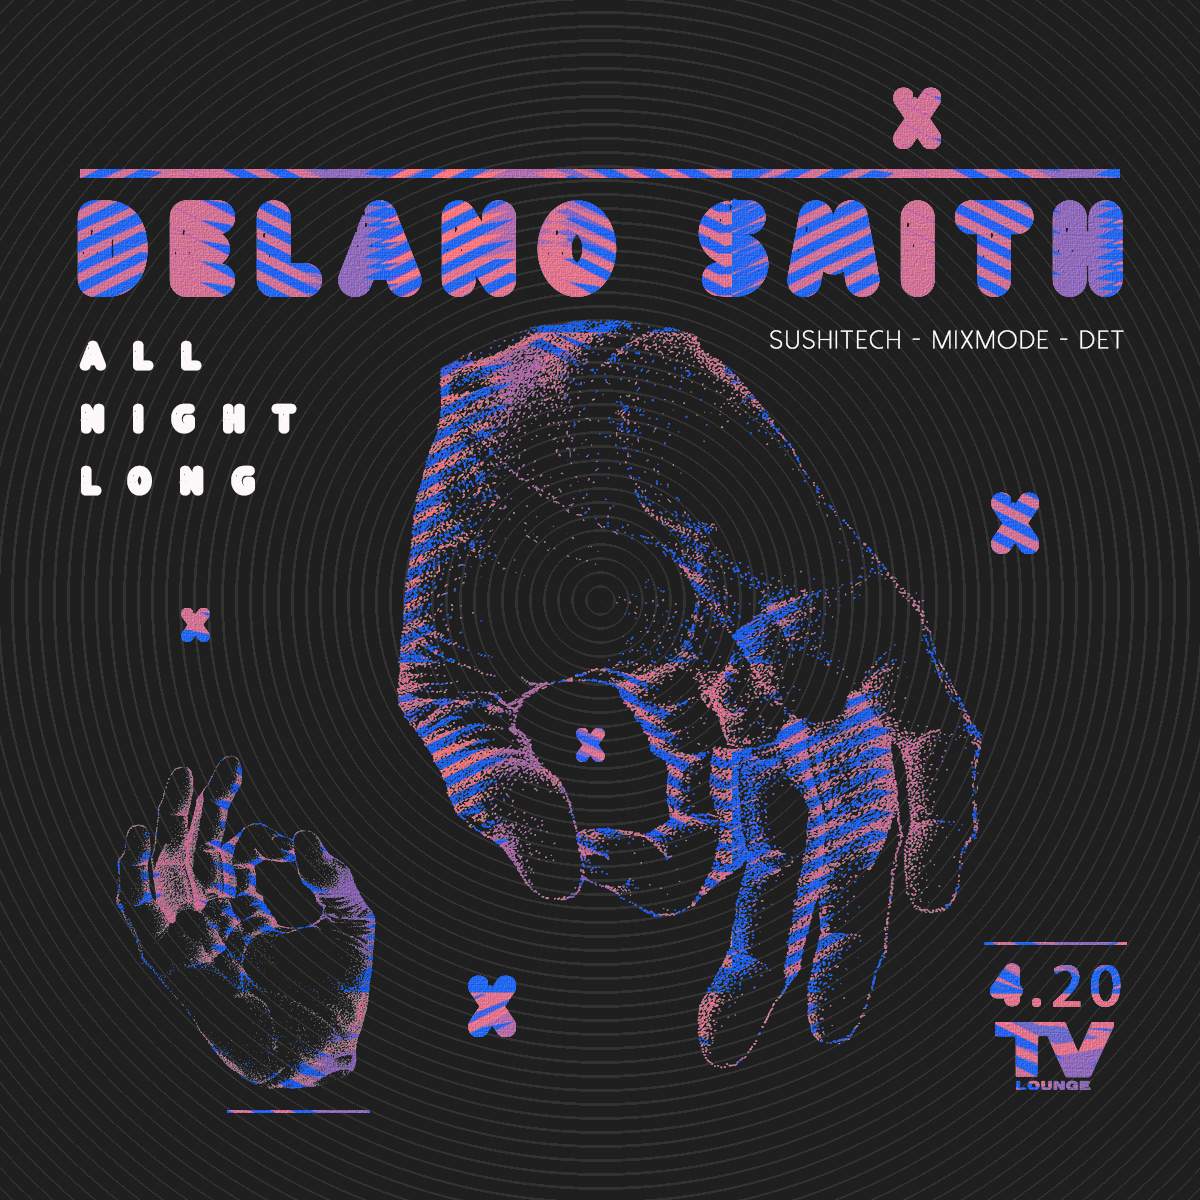 Delano Smith - All Night Long - フライヤー表